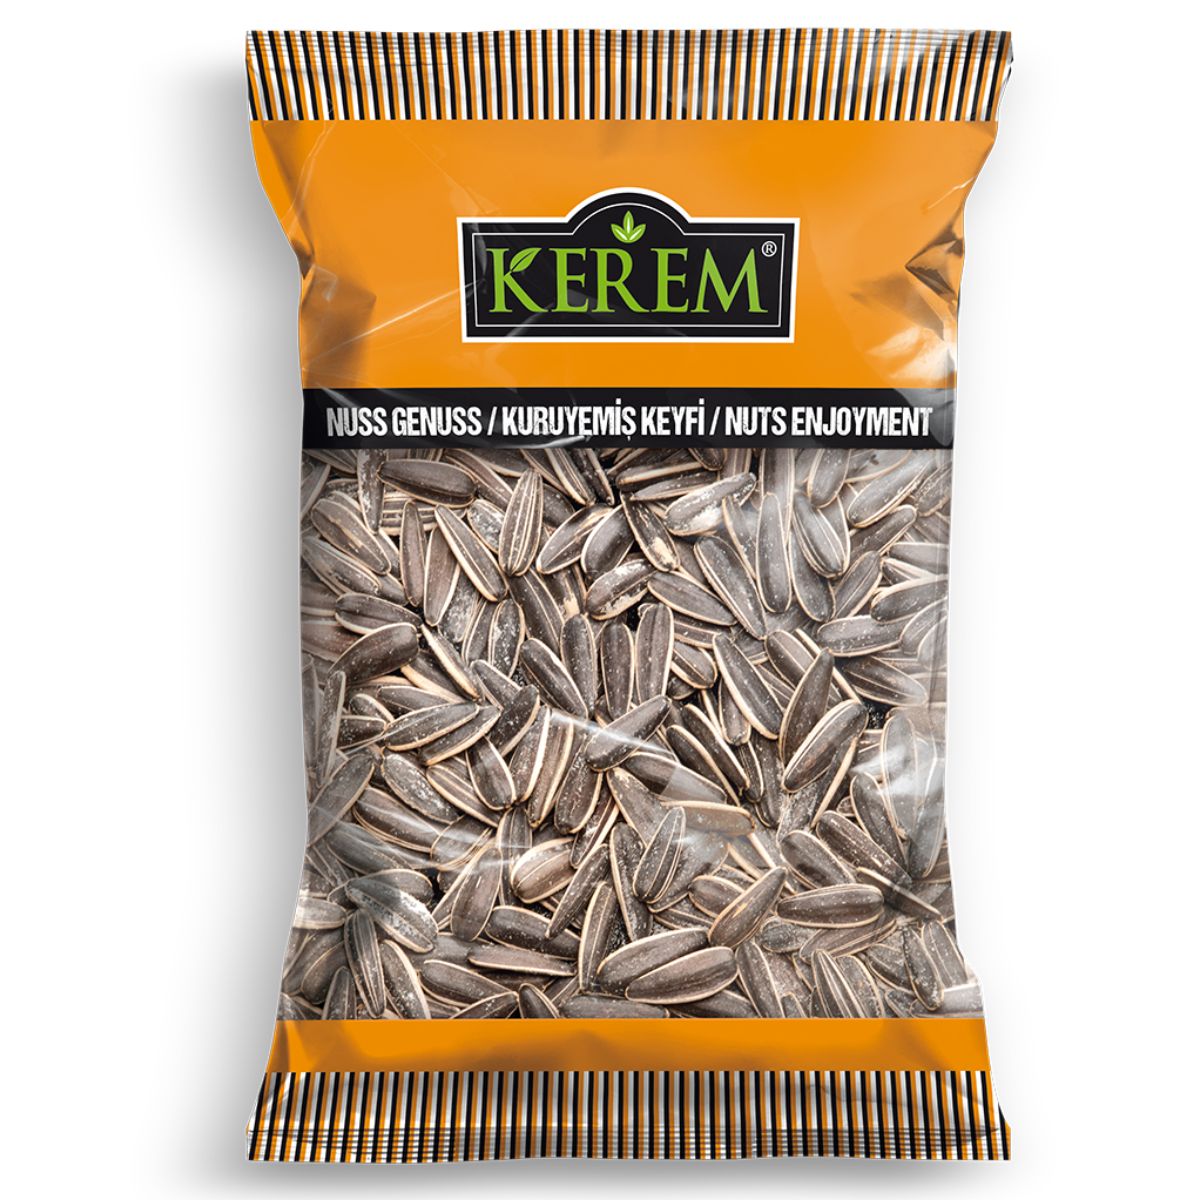 Kerem sunflower seeds in a bag.